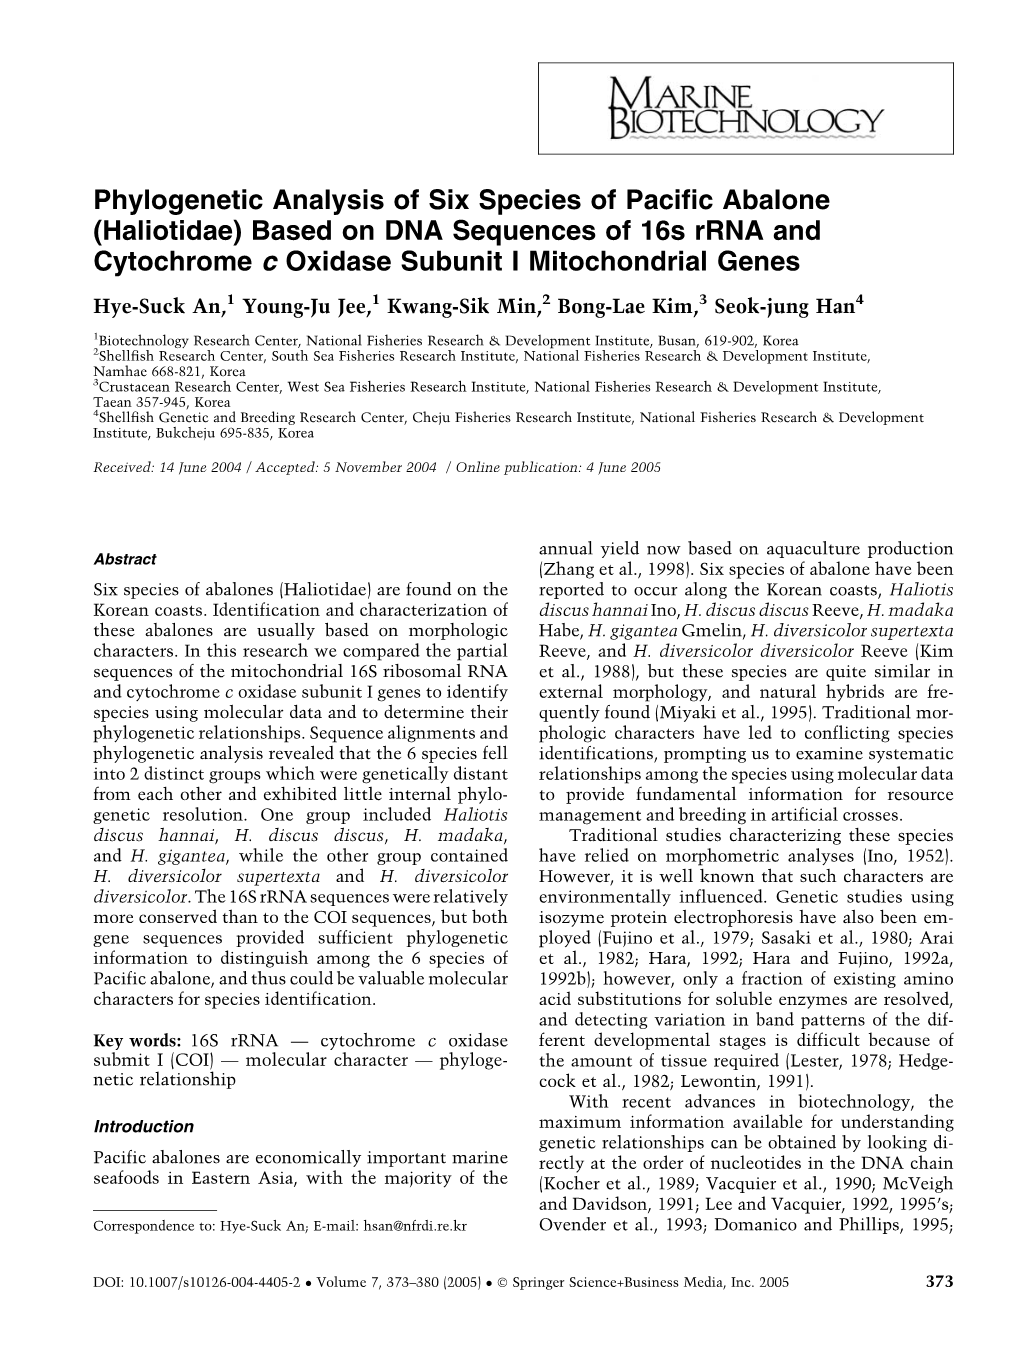 Phylogenetic Analysis of Six Species of Pacific Abalone (Haliotidae